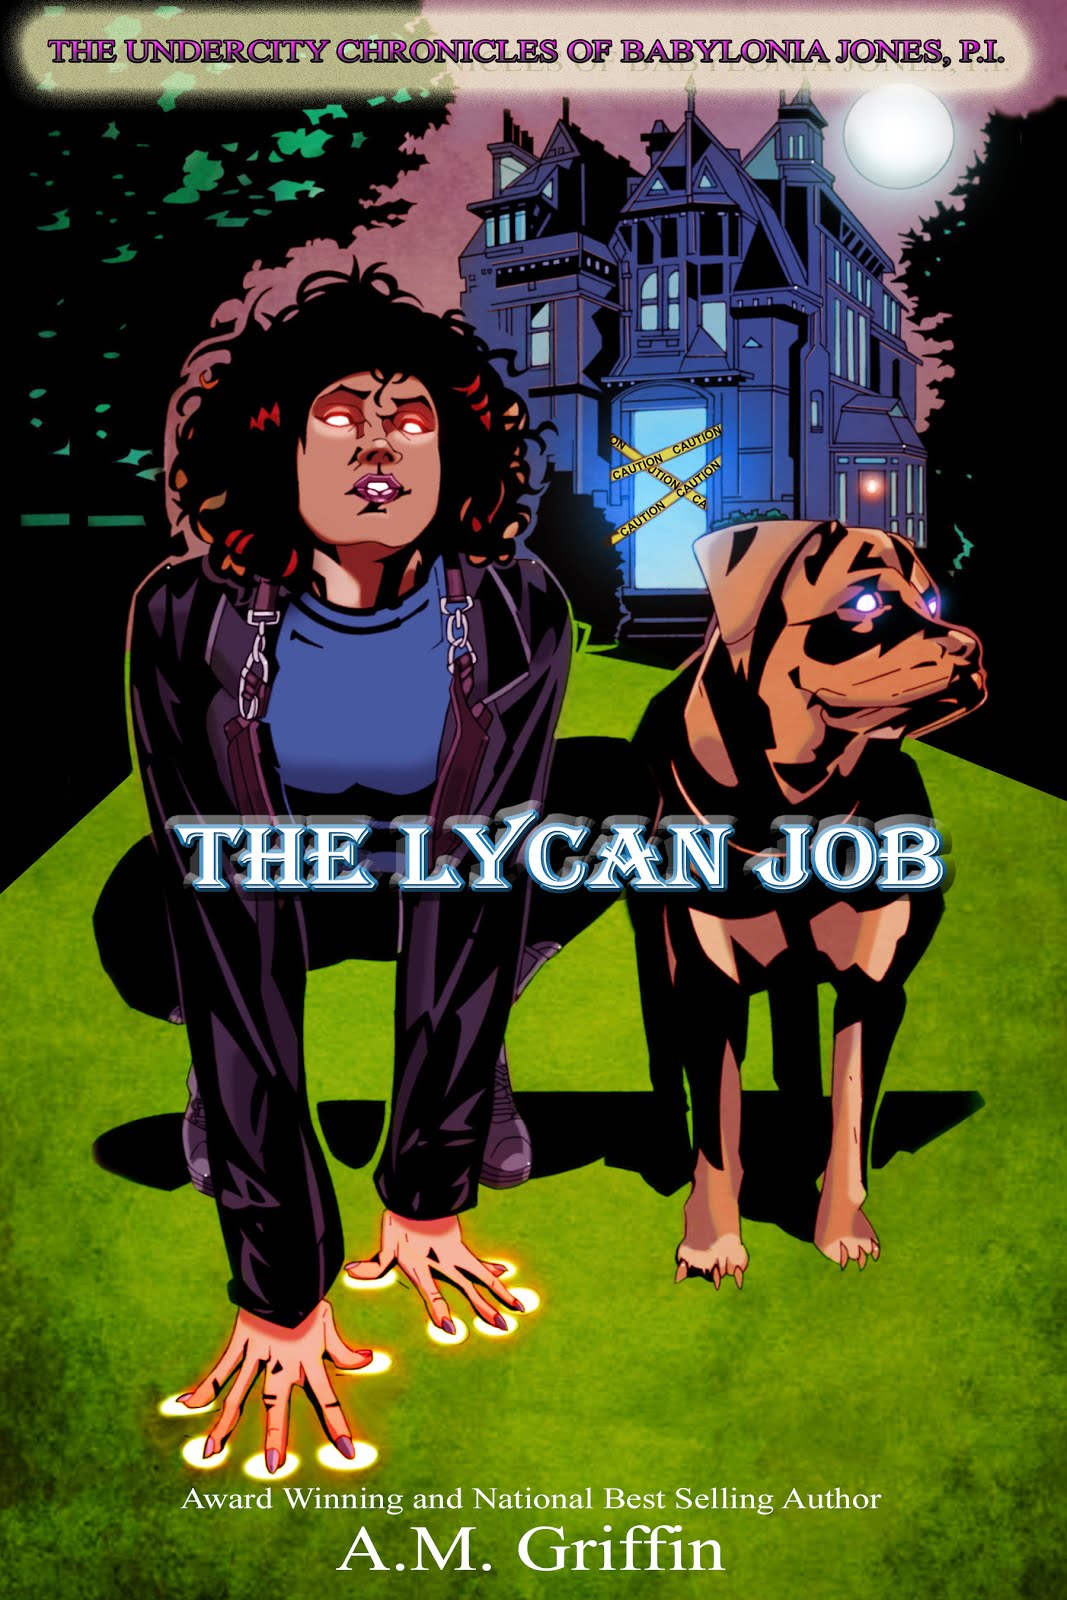 The Lycan Job